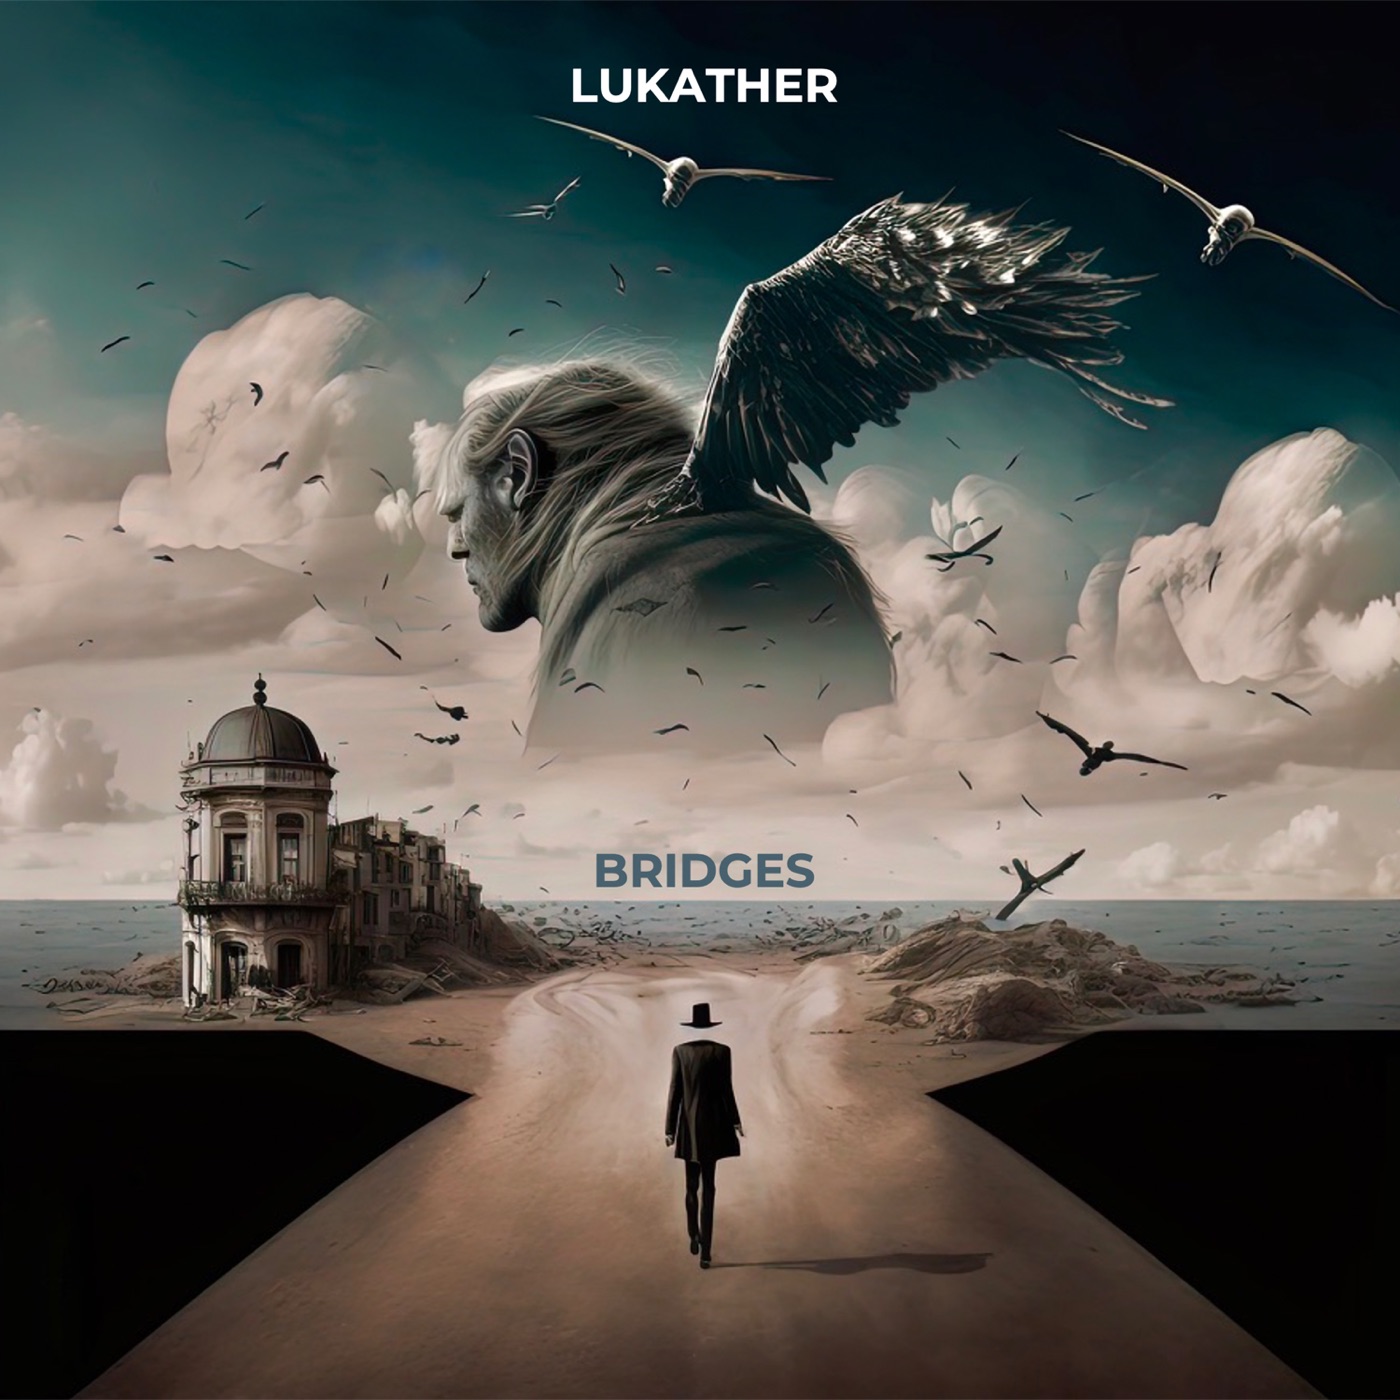 Bridges by Steve Lukather